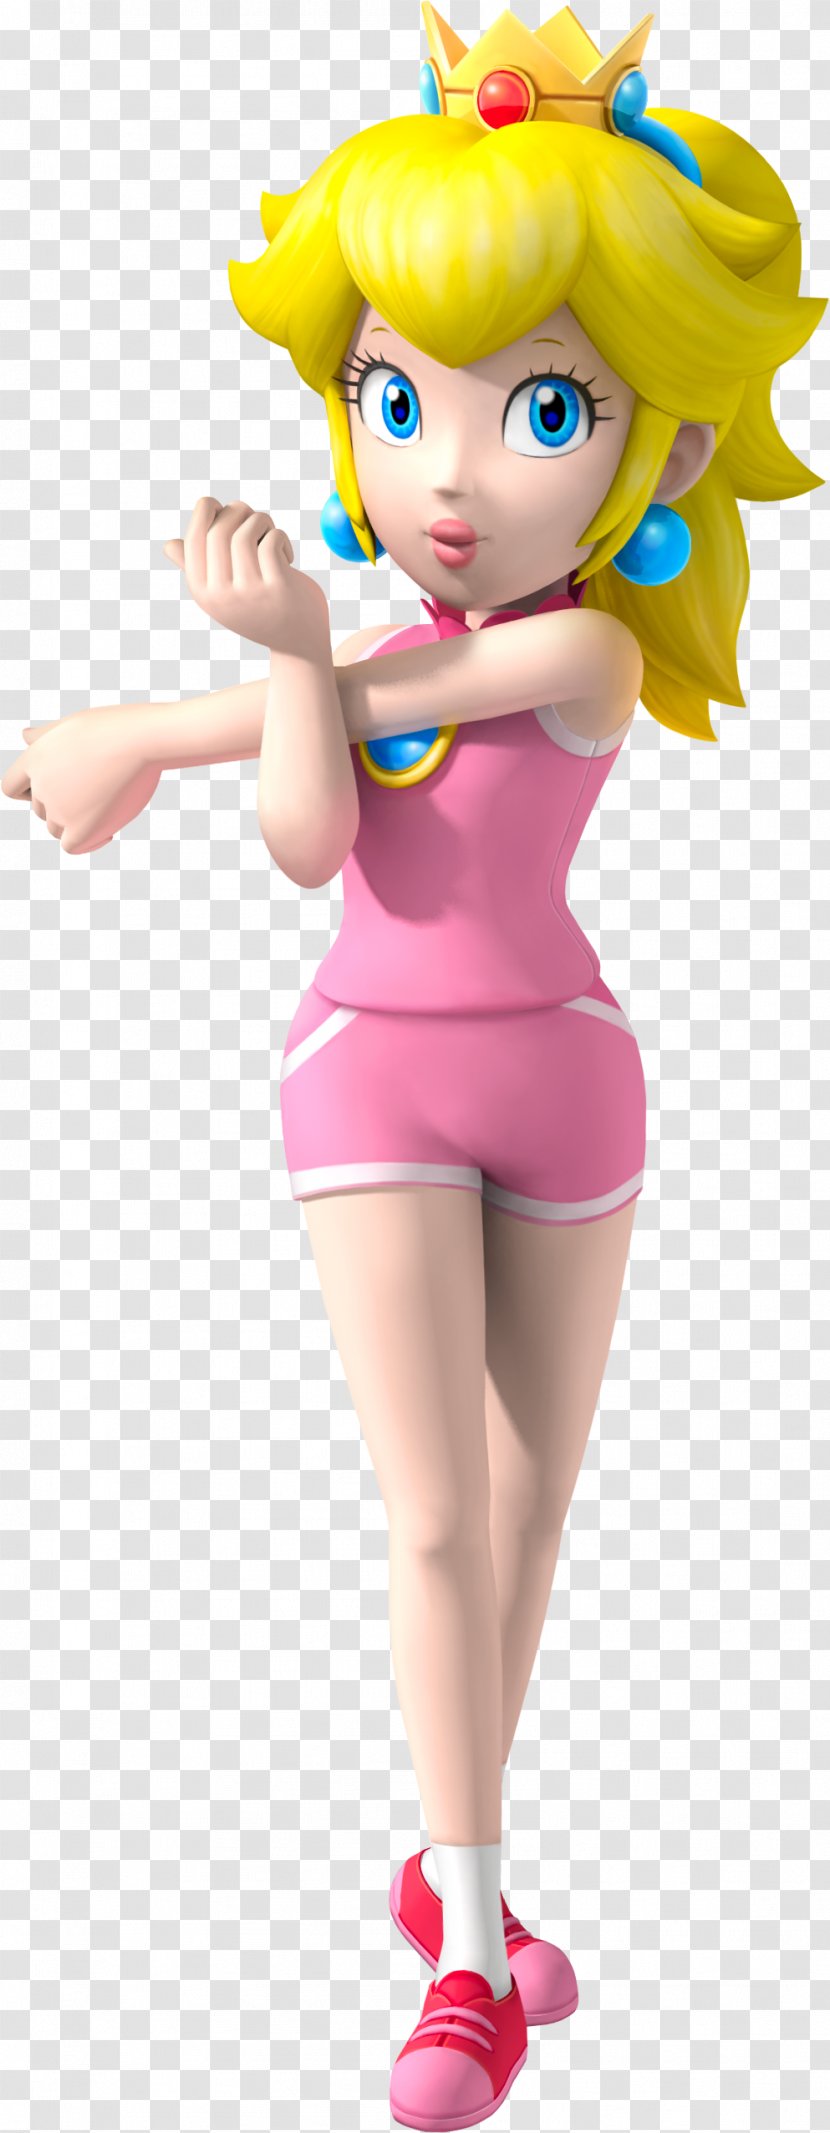 Princess Peach Daisy Super Mario Bros. Rosalina - Brown Hair Transparent PNG